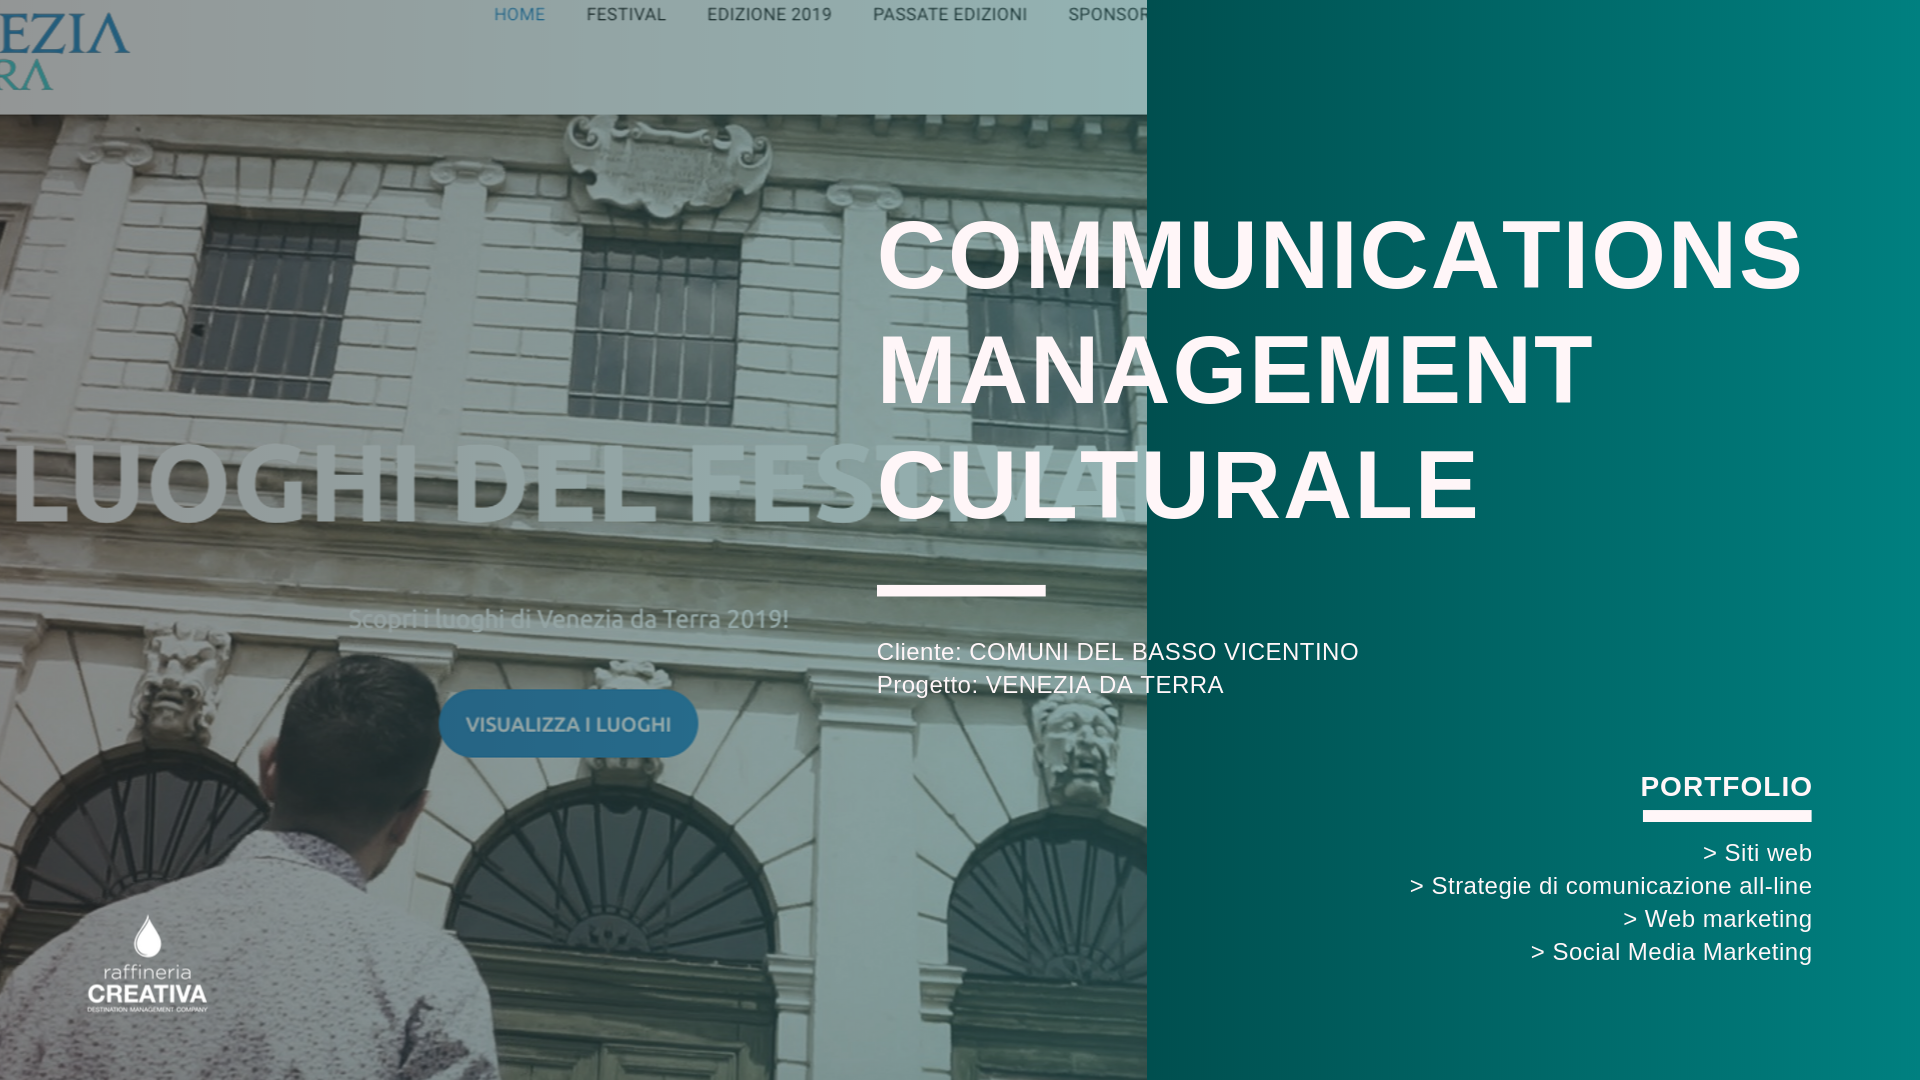 communications management culturale - venezia da terra 2019